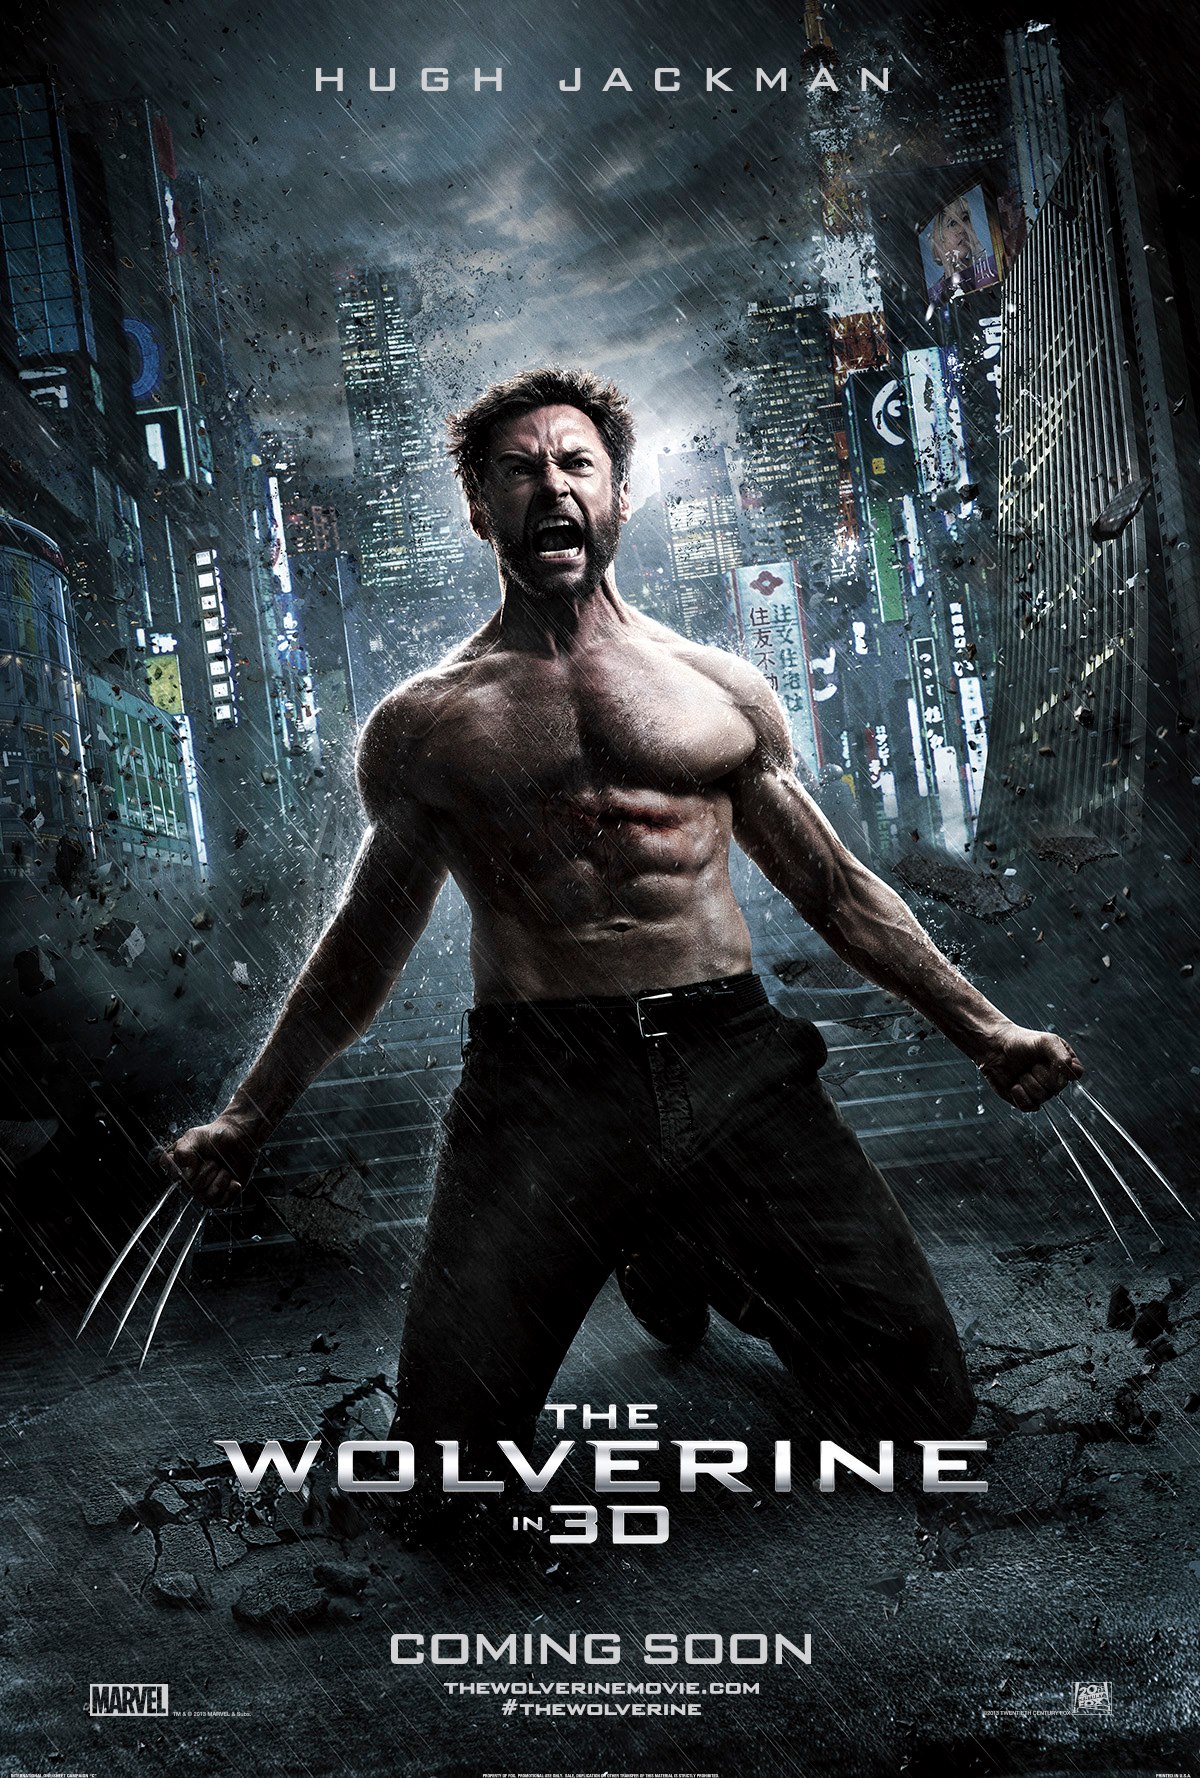 893608 611493072199892 133500944 o - The Wolverine: International Trailer @WolverineMovie